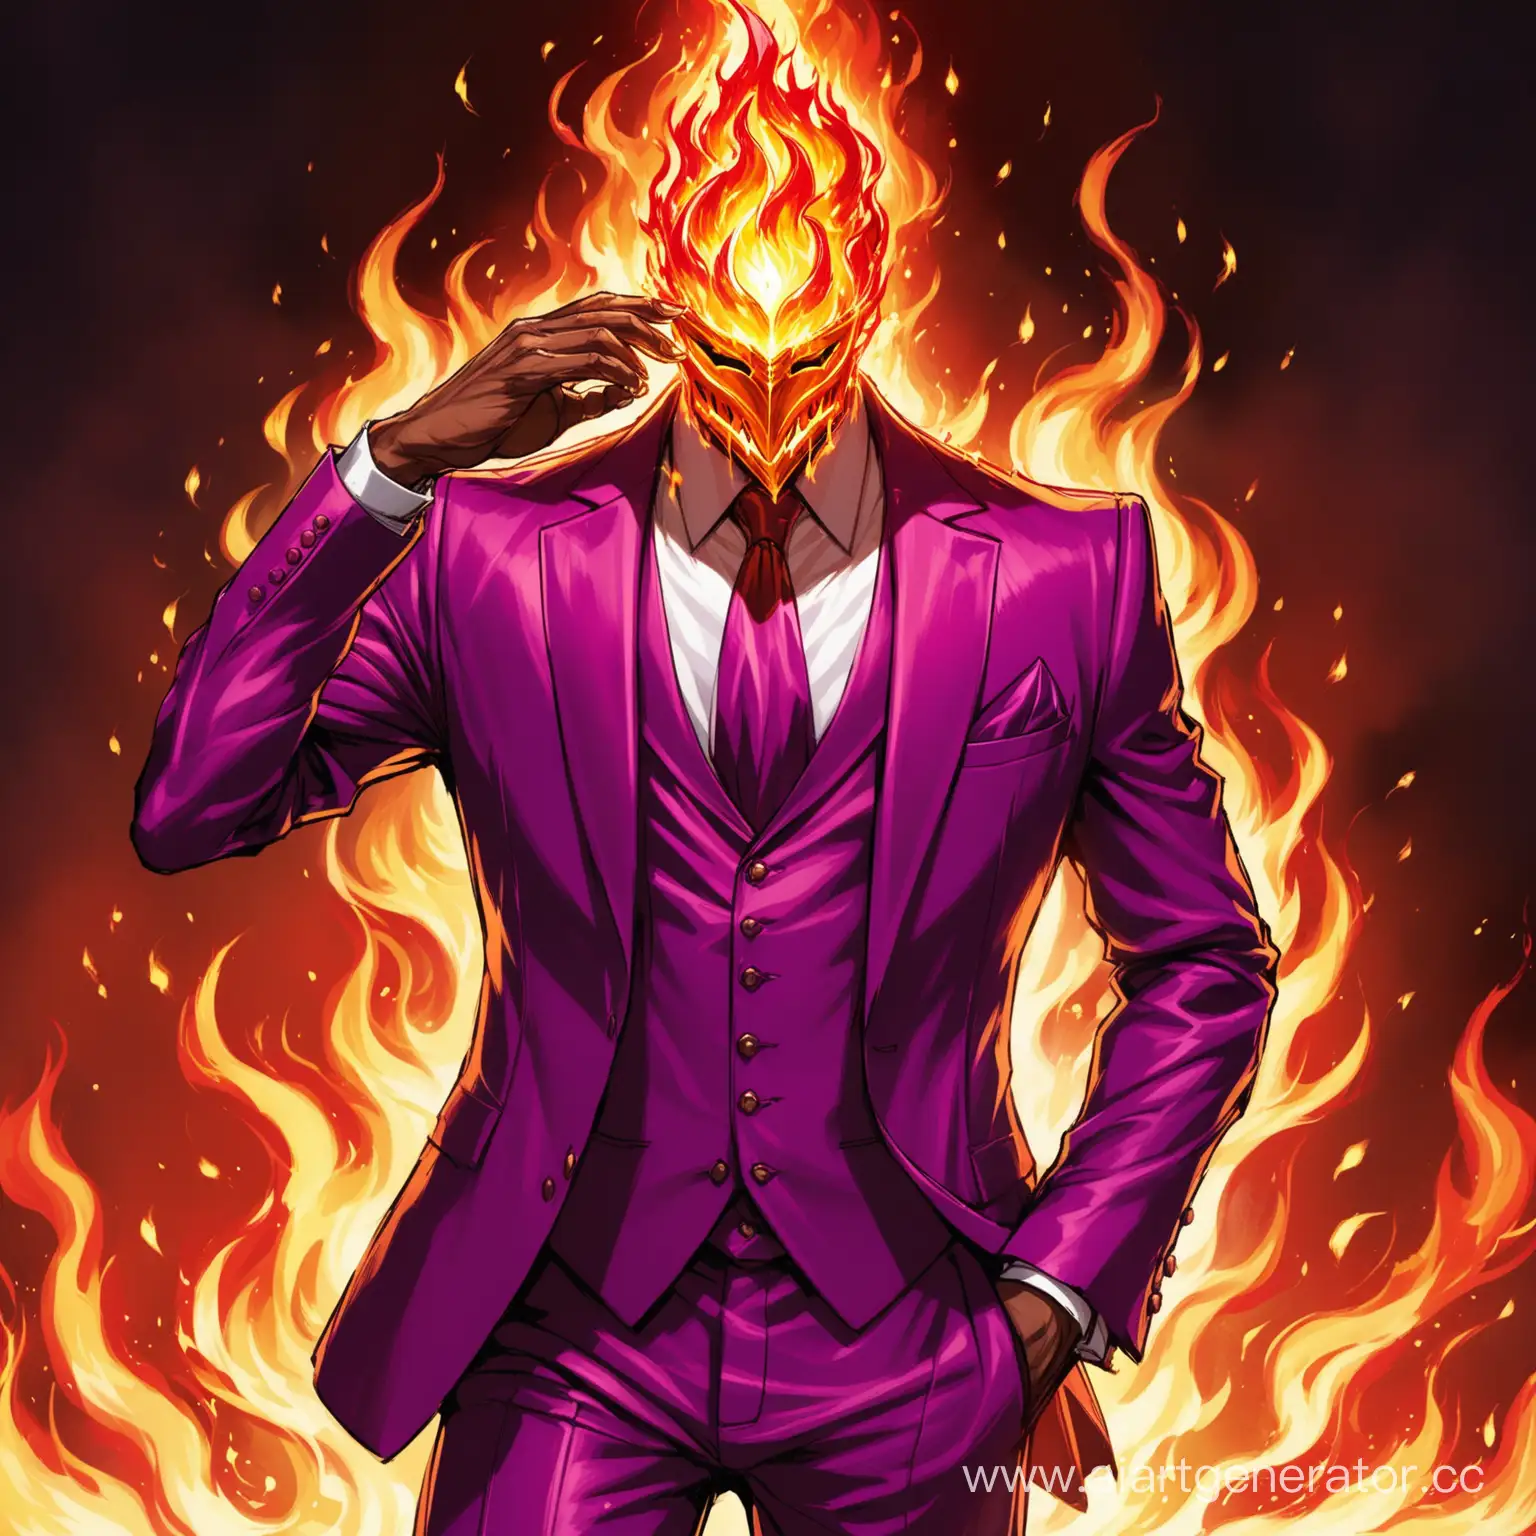 Regal-Monarch-of-Crimson-Metal-in-Elegant-Purple-Business-Attire